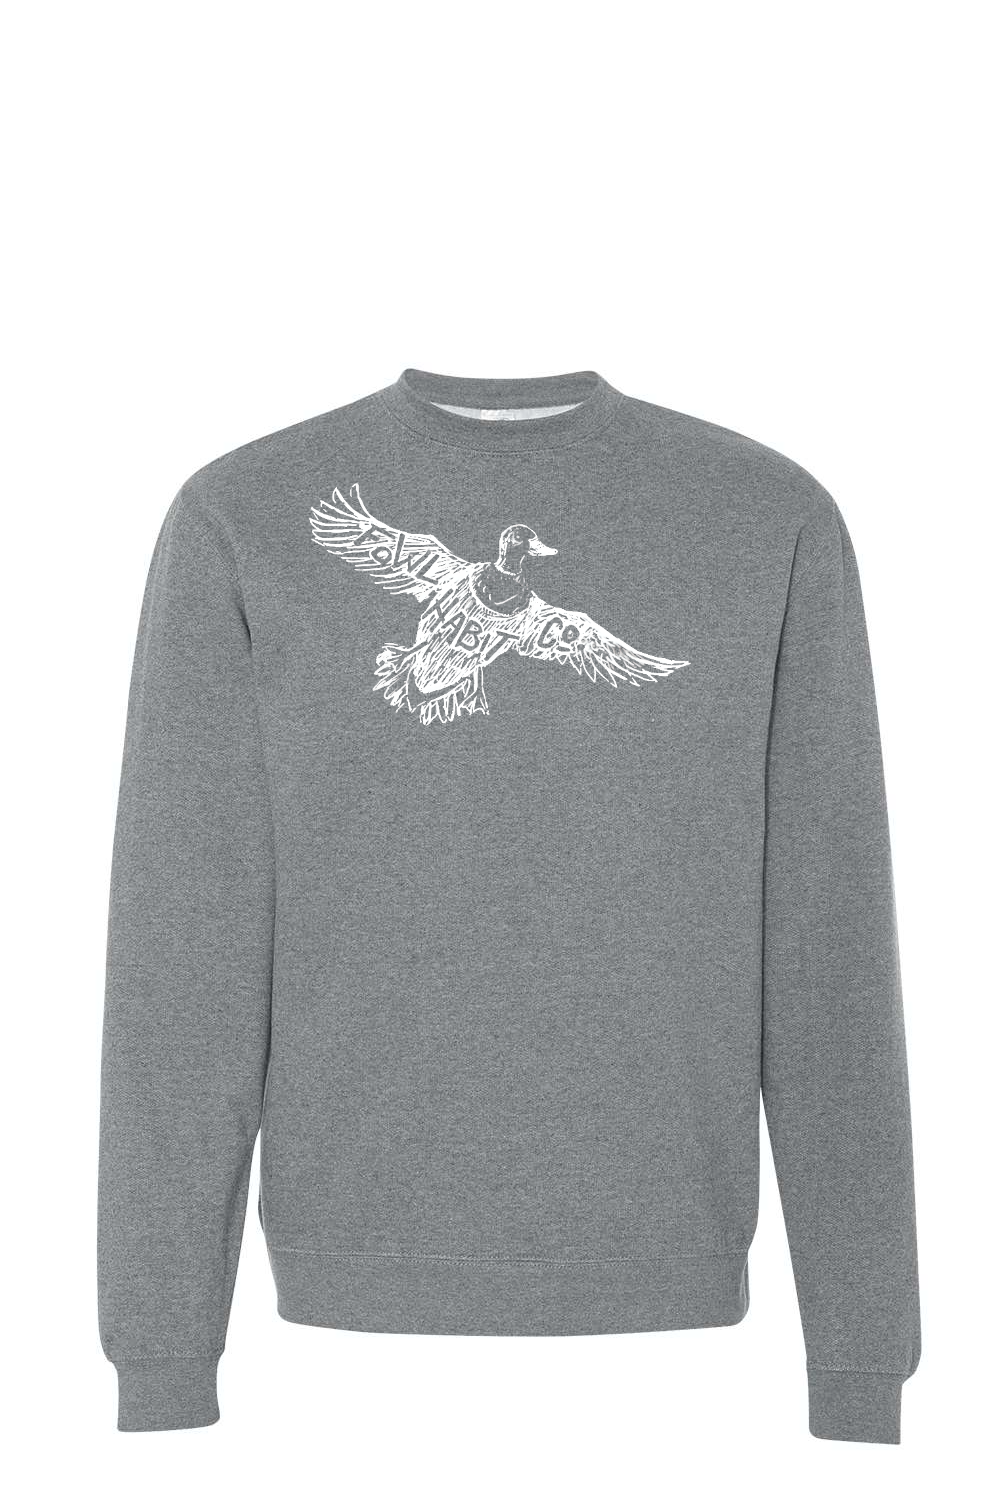 Mallard Drake Sweatshirt - Fowl Habit Co.